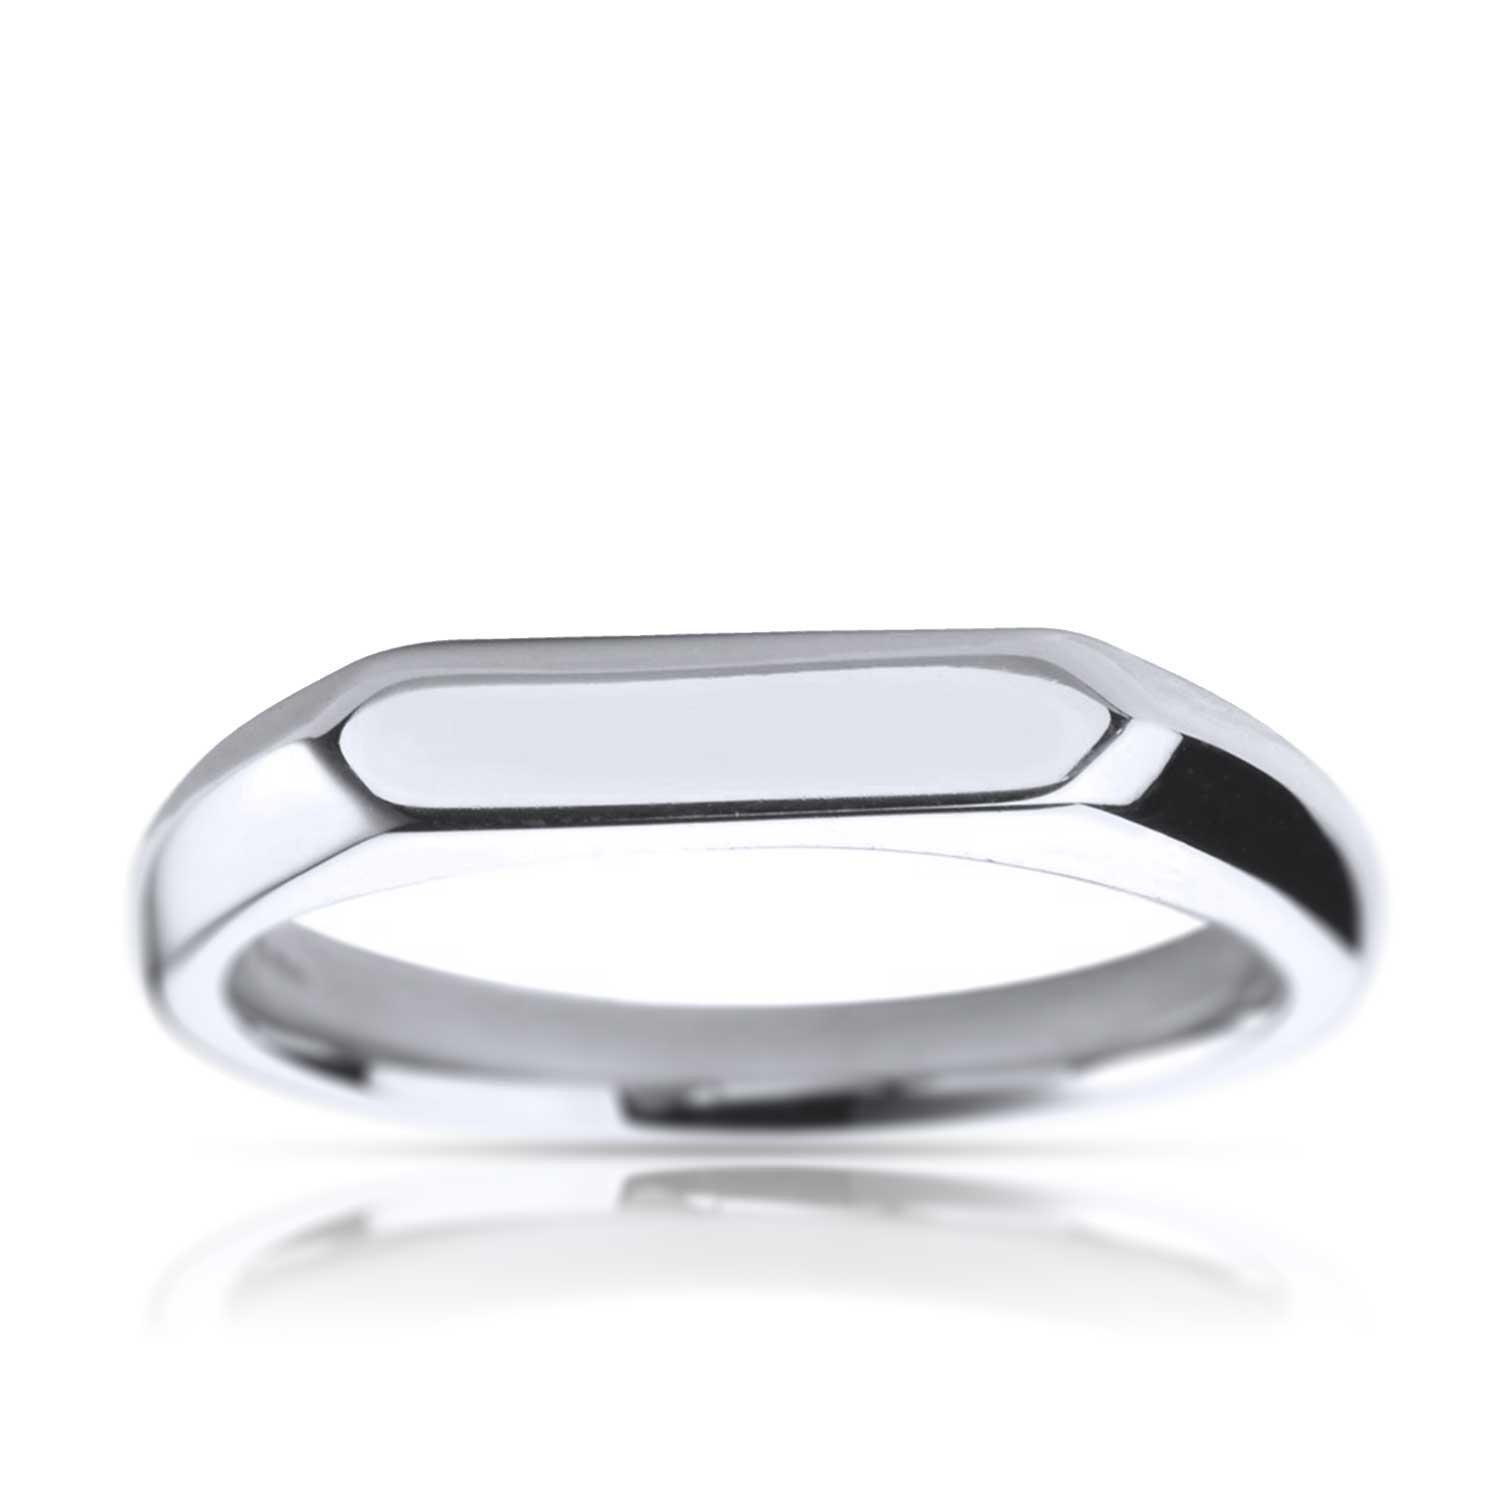 HExagon Ring Gold Ring Details about   Hexagon stainless steel Signet Ring men women Ring